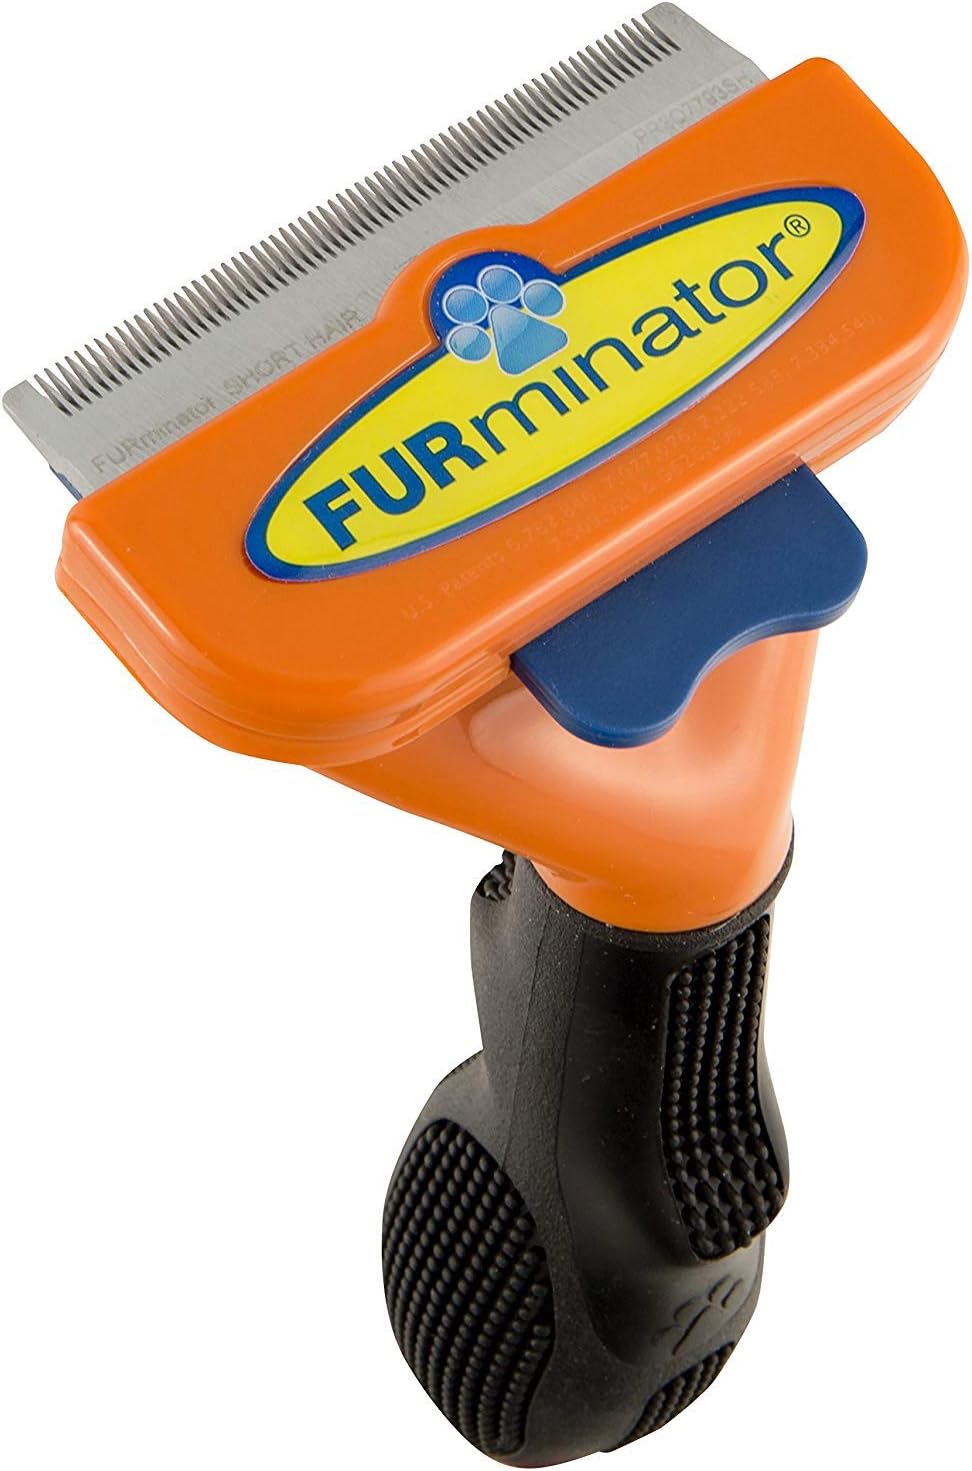 FURminator Short Hair Deshedding Tool for Medium Dogs